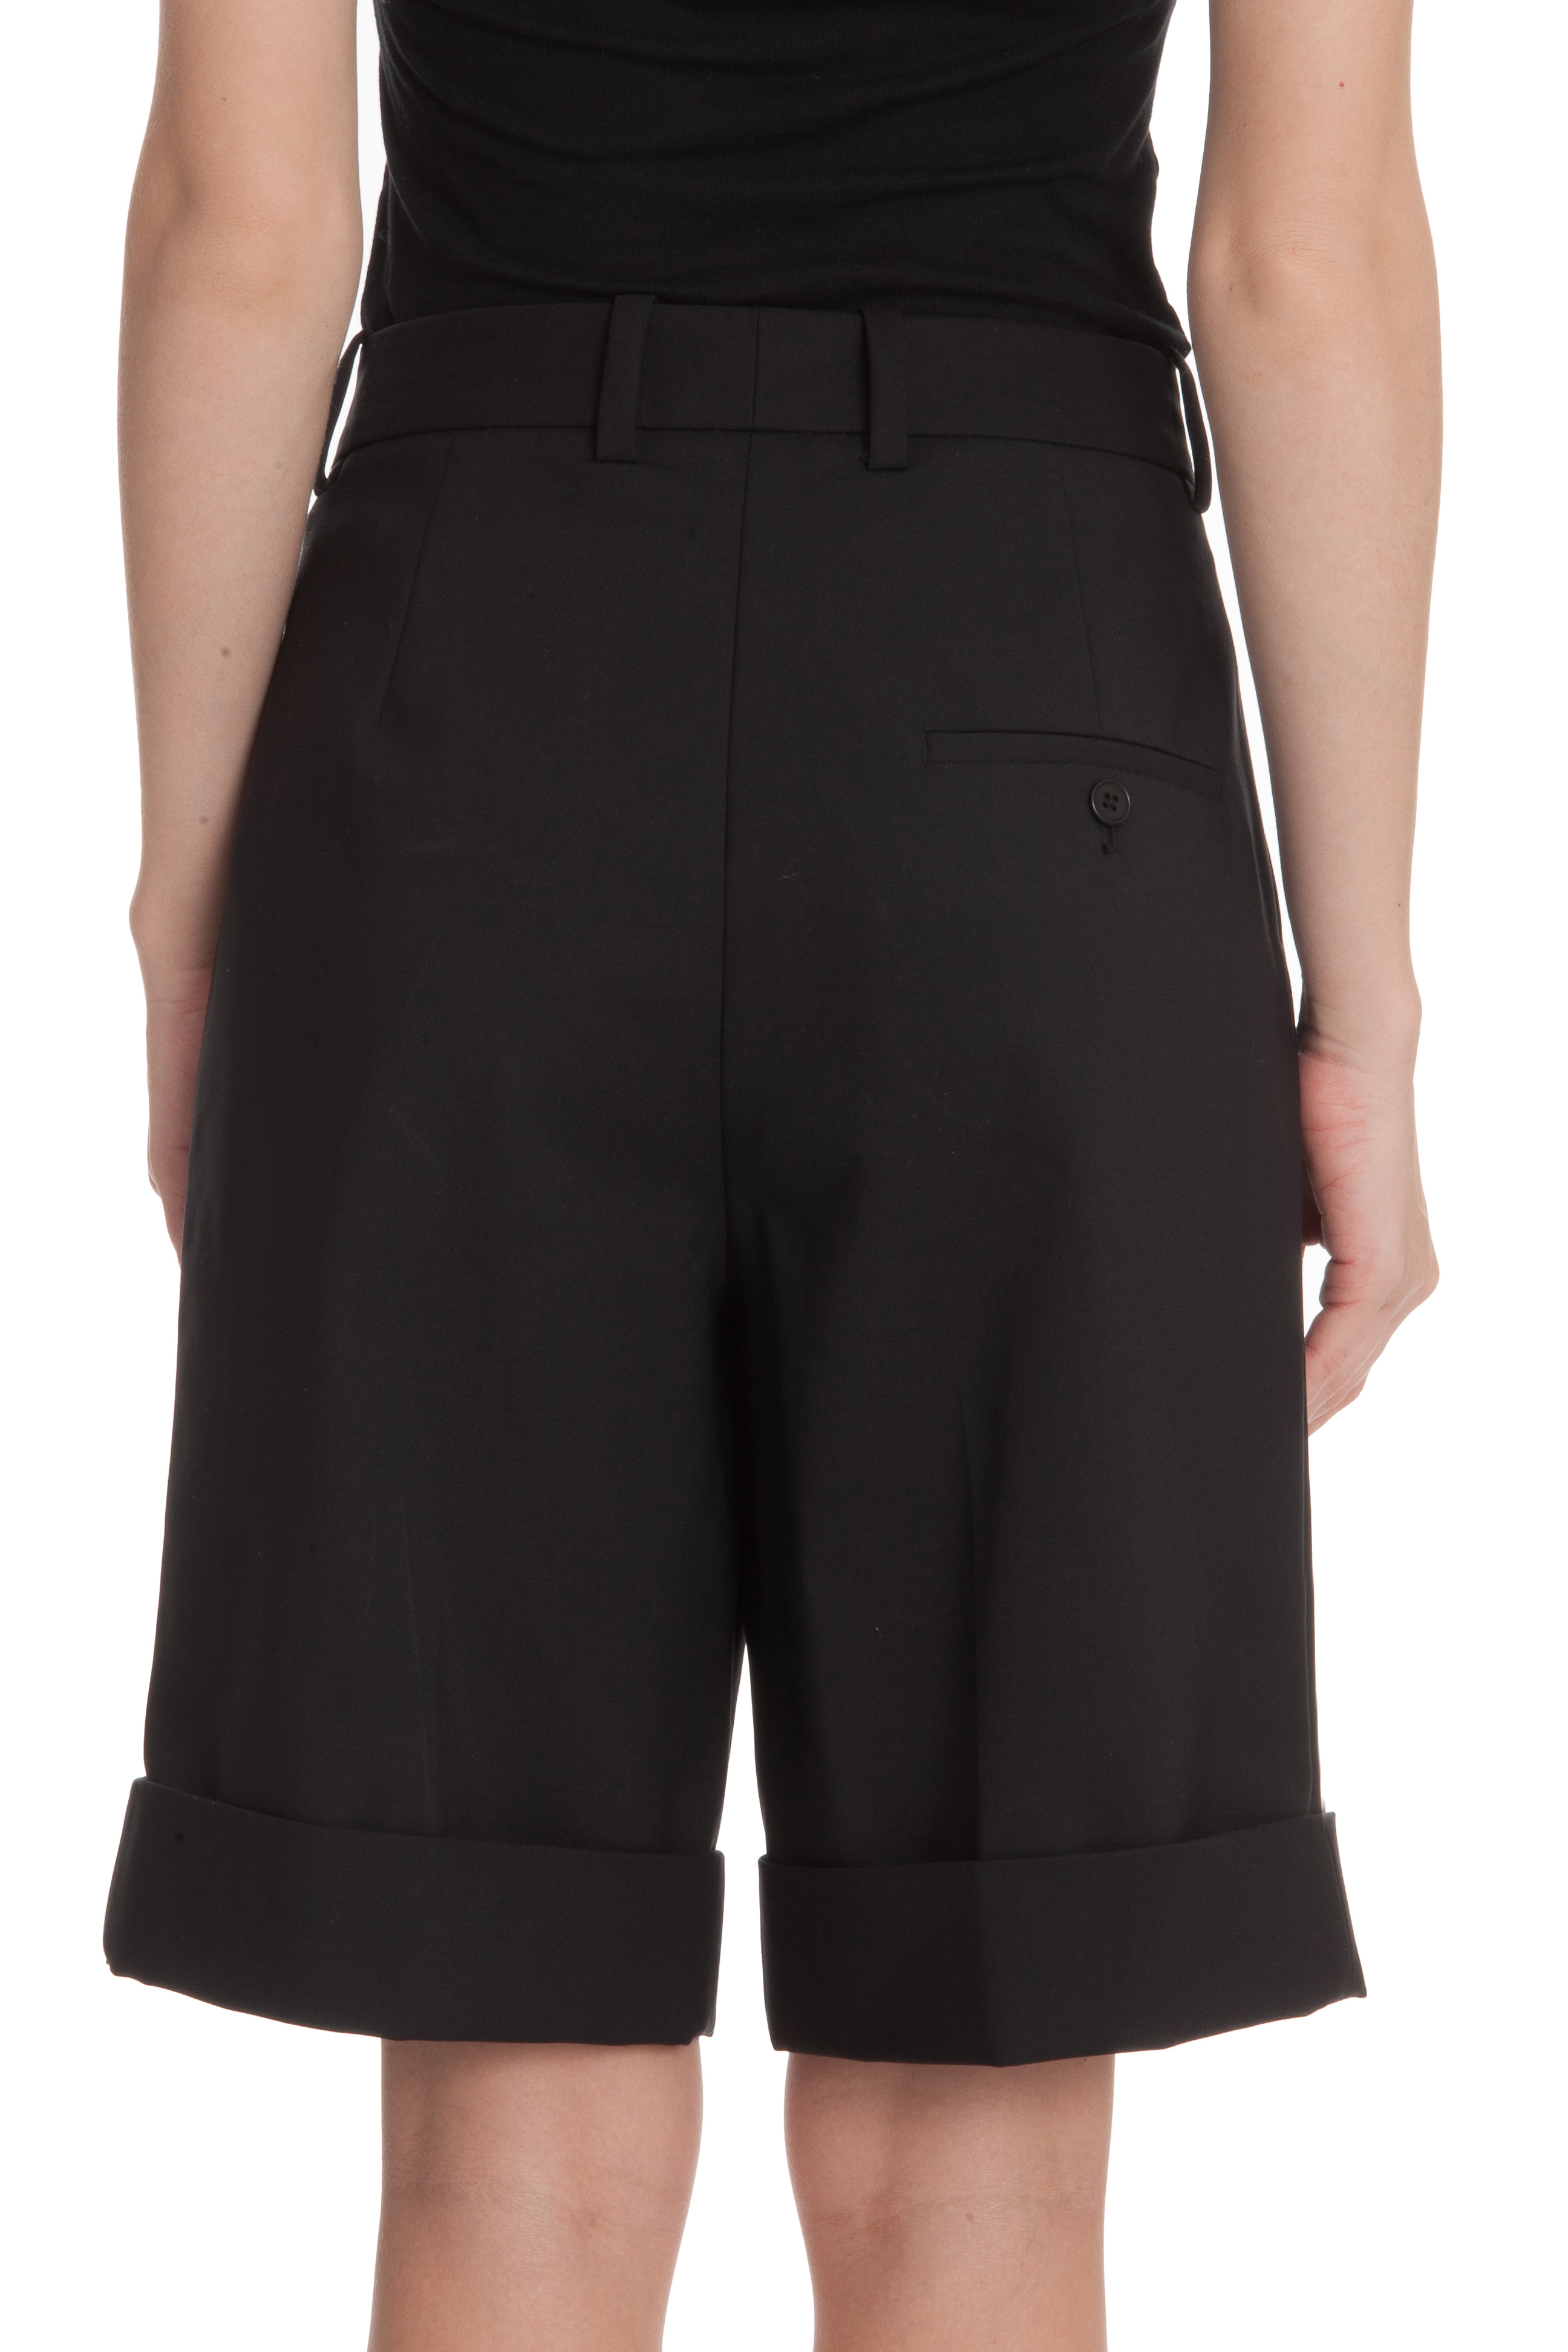 Lyst - 3.1 phillip lim Pleated Bermuda Shorts in Black